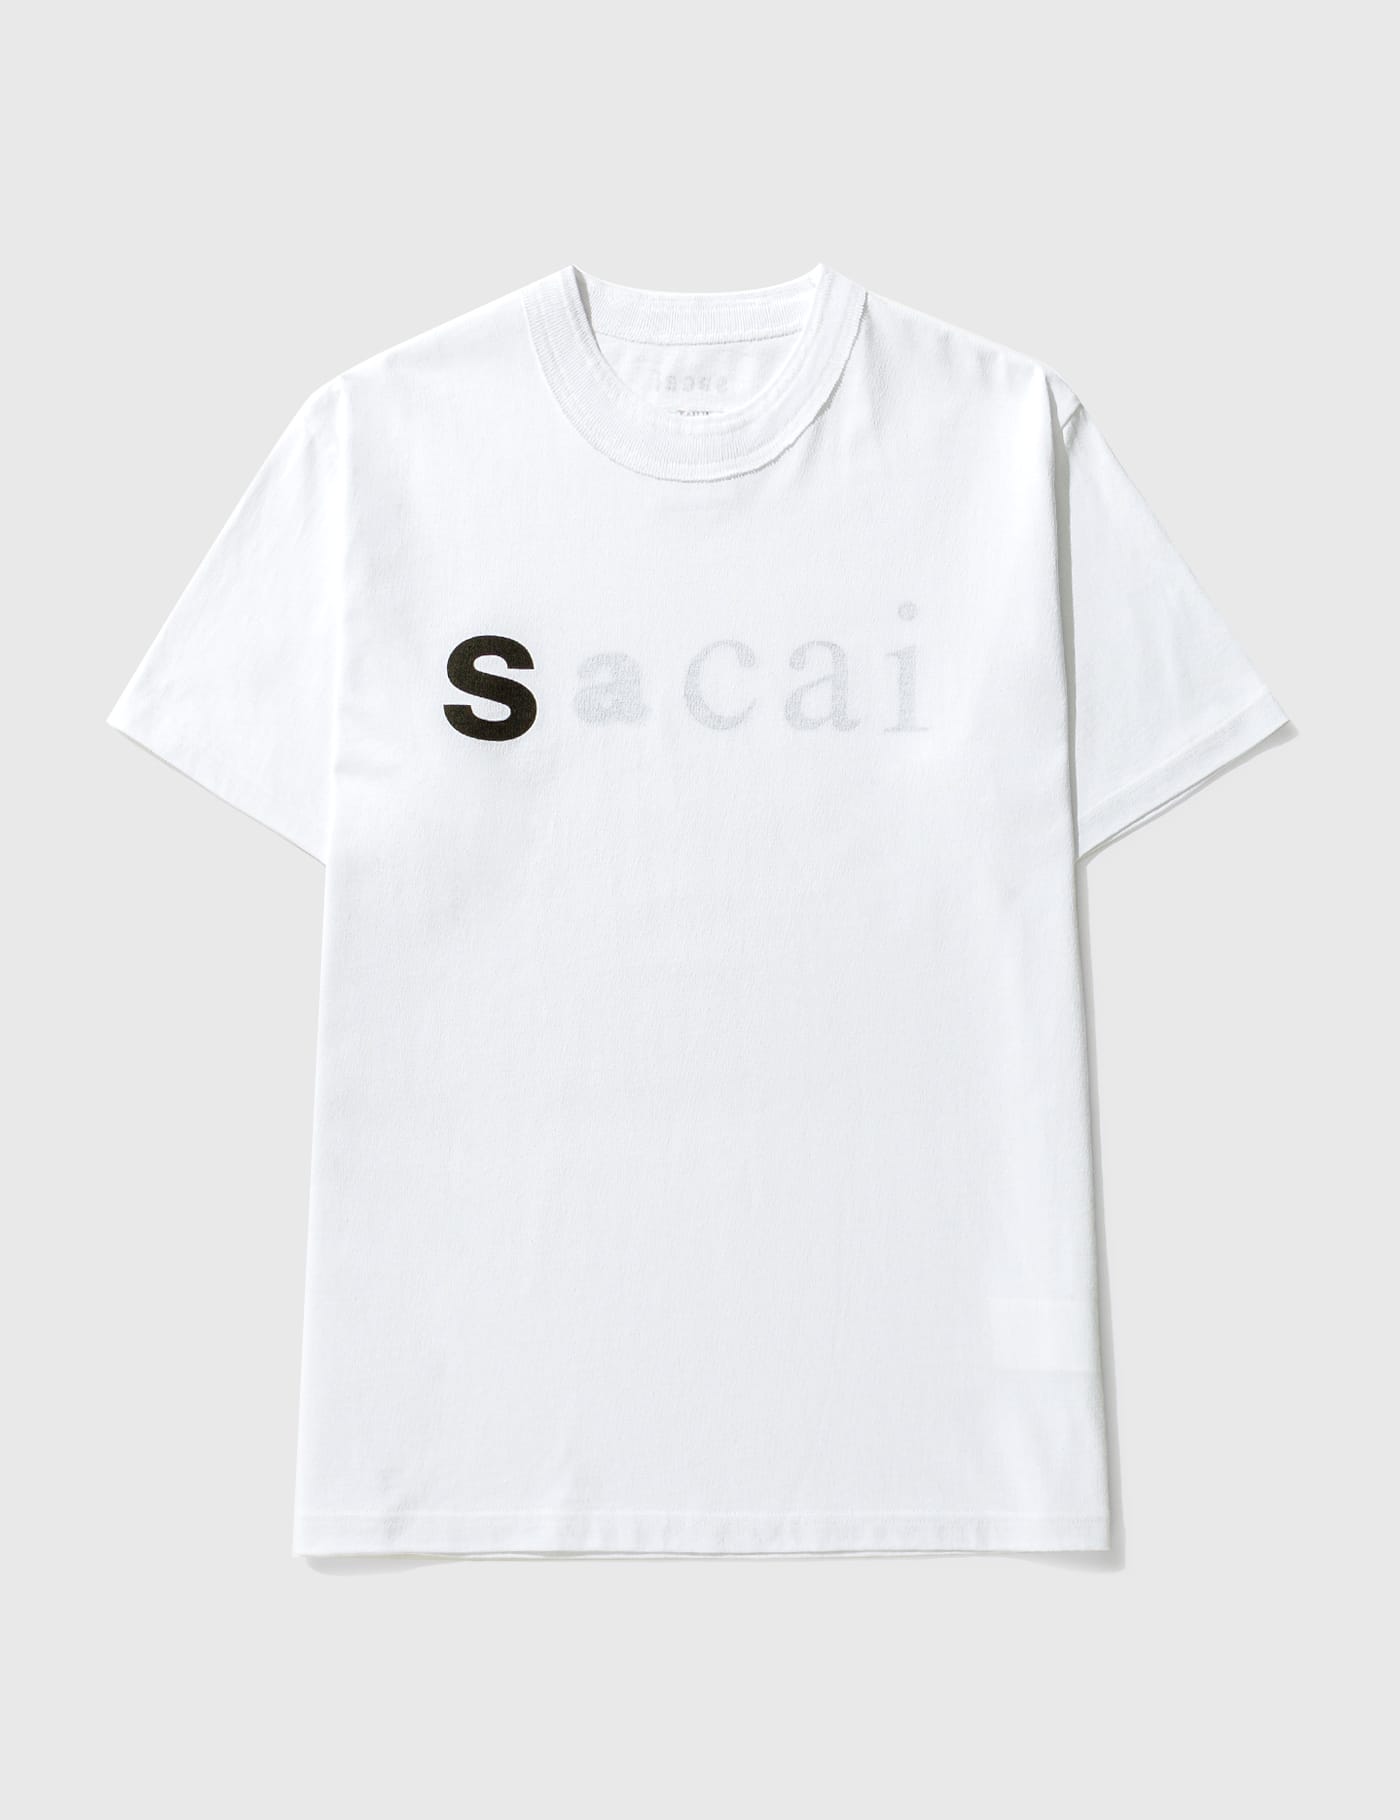 Sacai - Fading Logo T-shirt | HBX - Globally Curated Fashion and